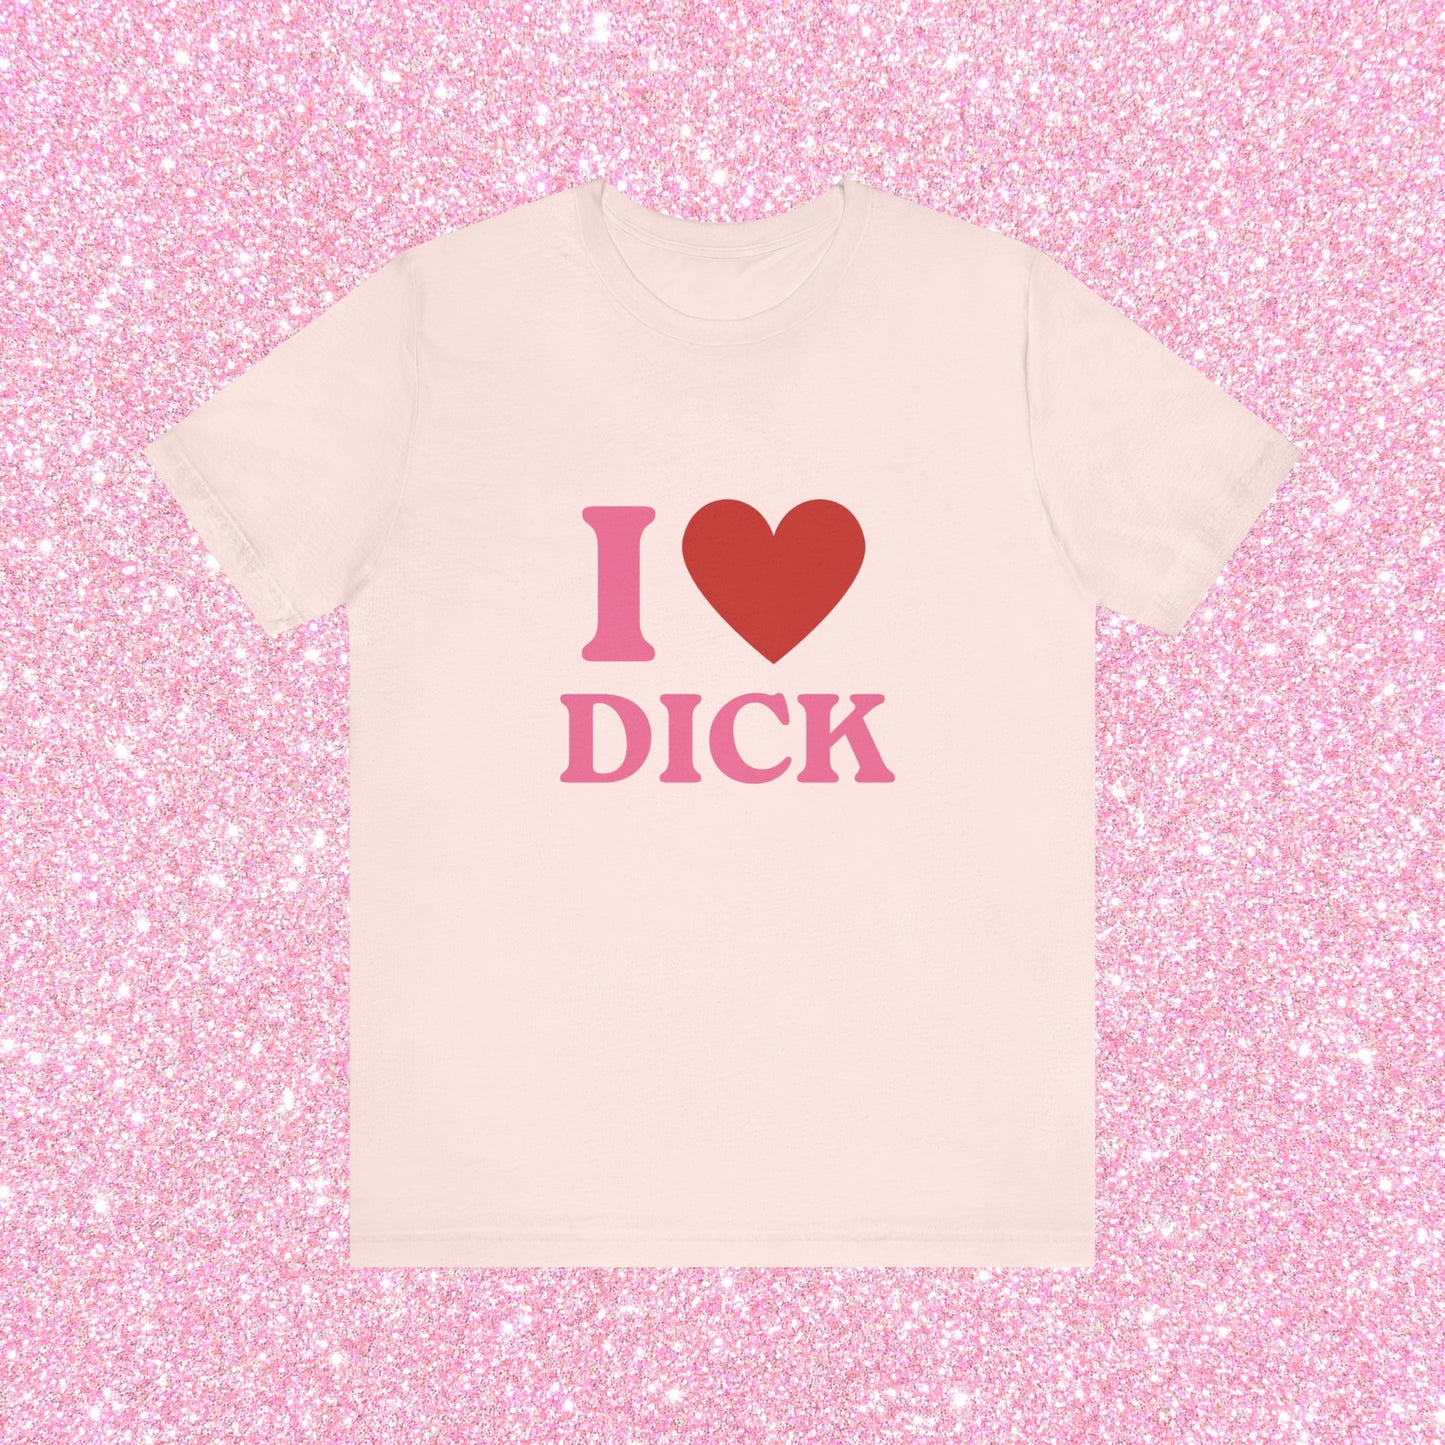 I Heart Dick - Funny Unisex T-Shirt, I Love Dick, Pride Tee